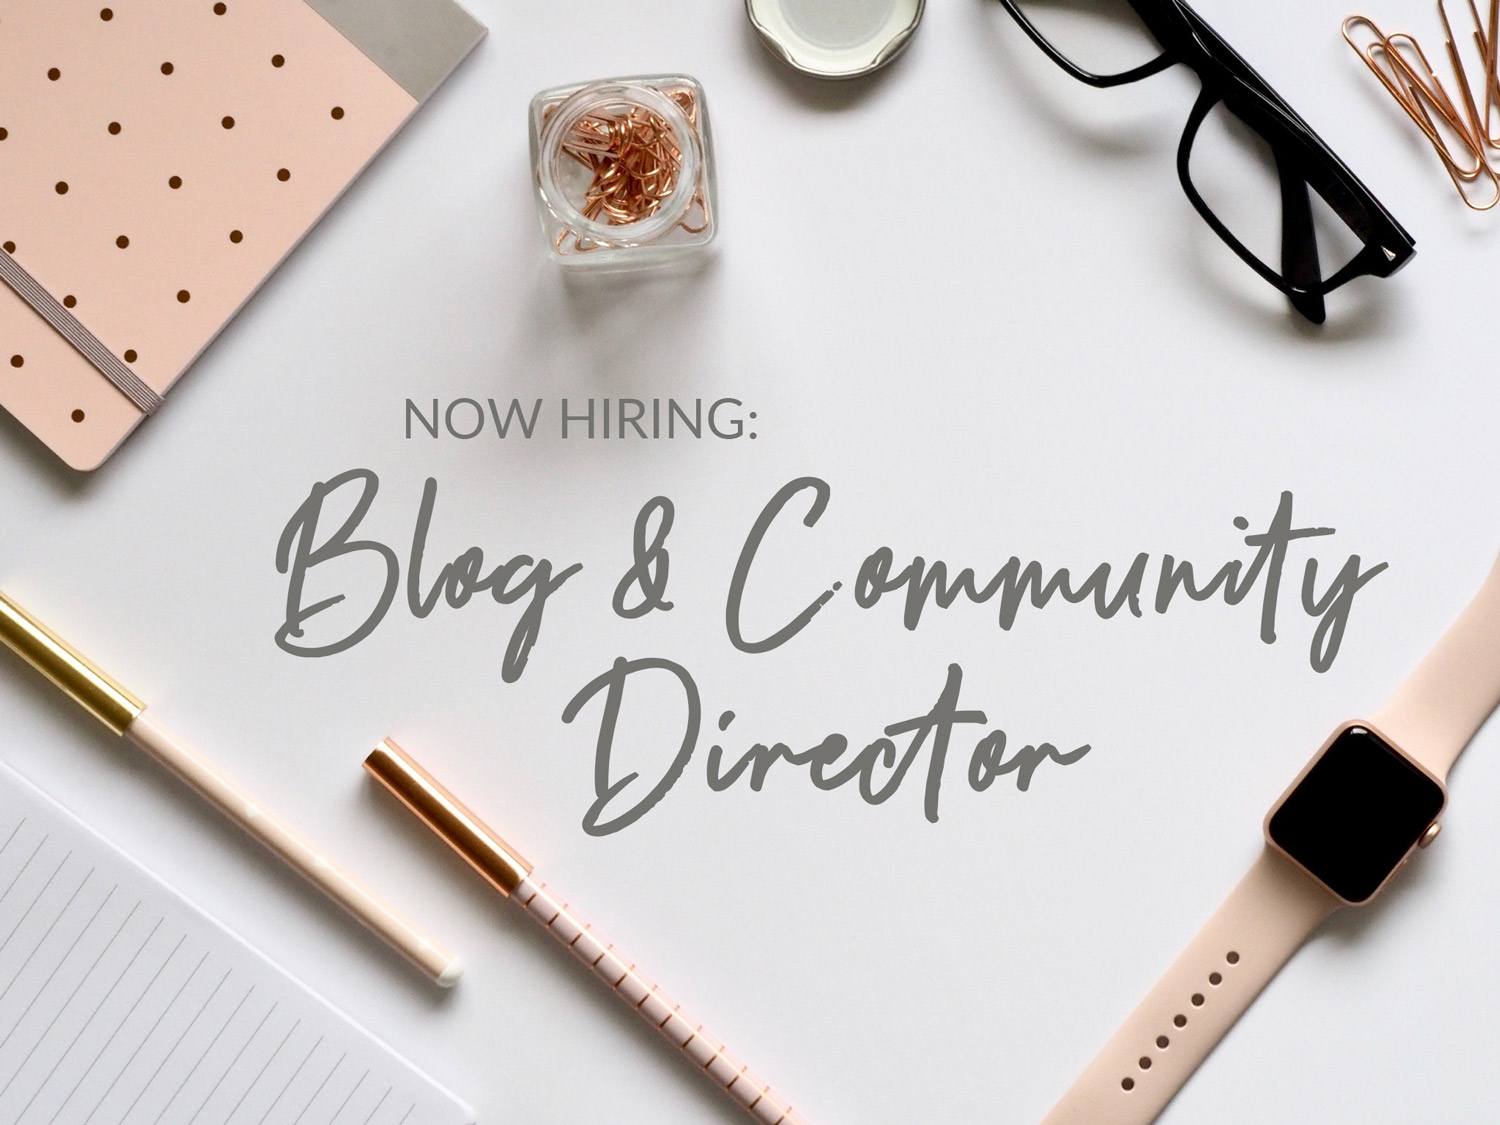 Blog & Community Director